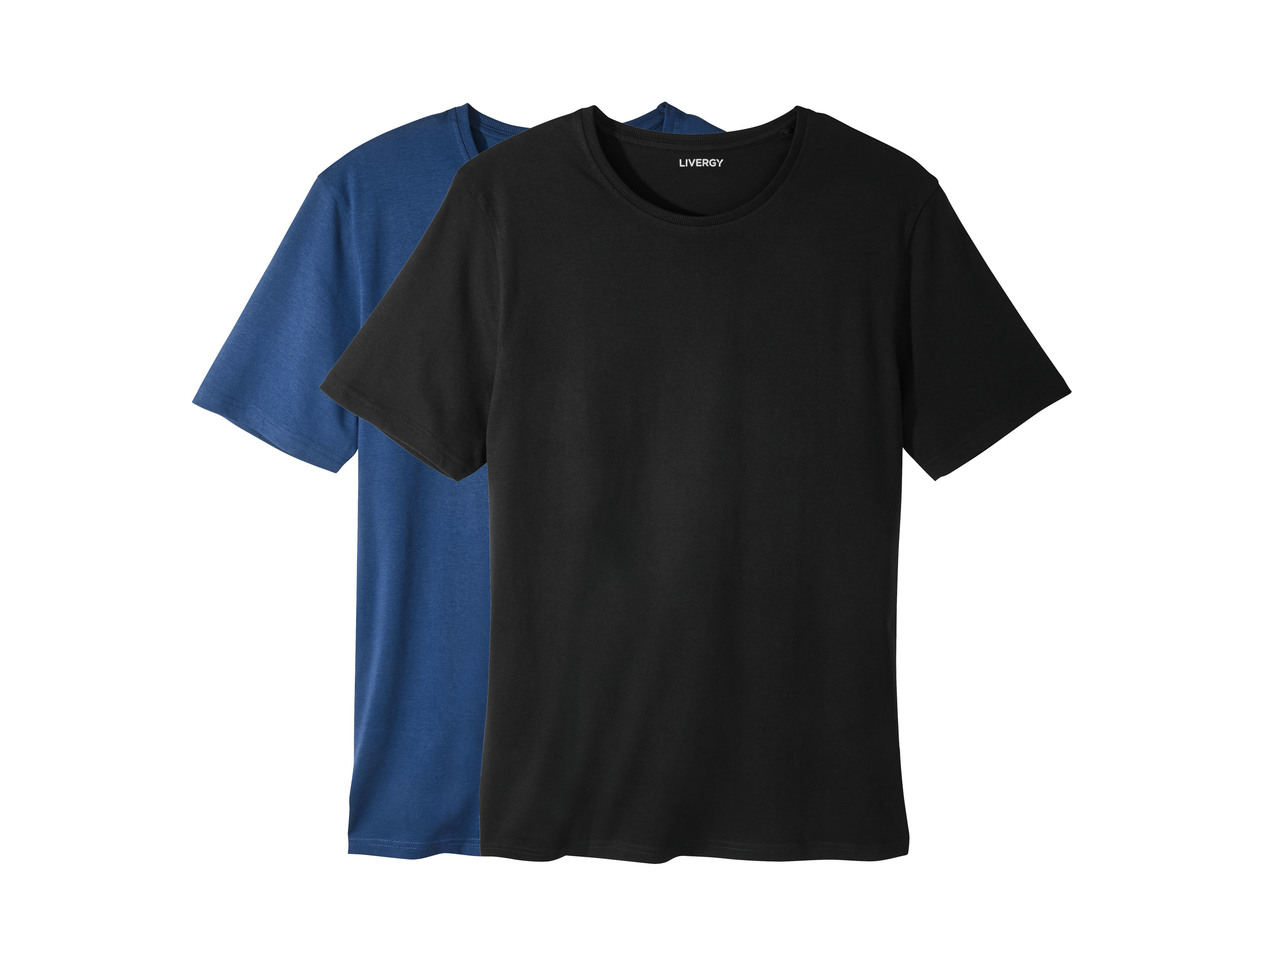 LIVERGY(R) T-shirt 2 Unid.